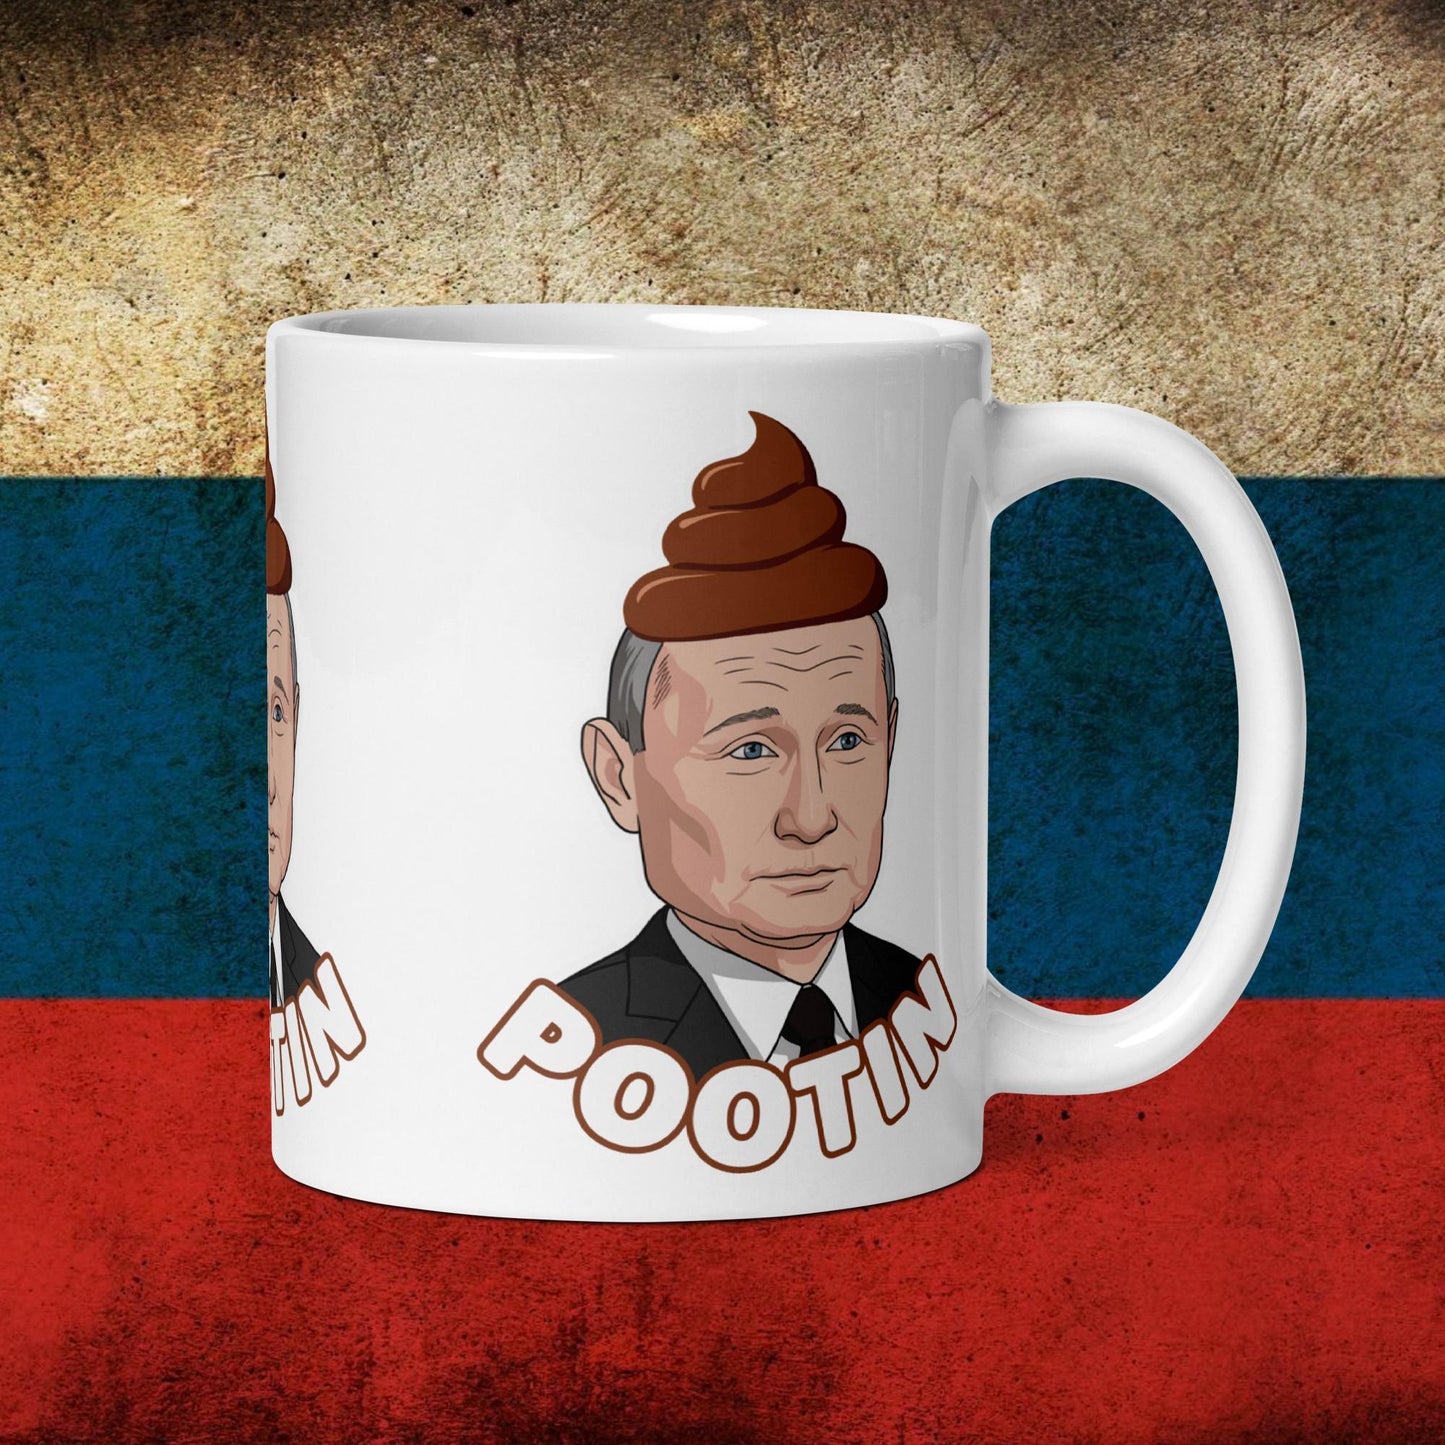 Pootin Funny Anti Vladimir Putin White glossy mug Next Cult Brand